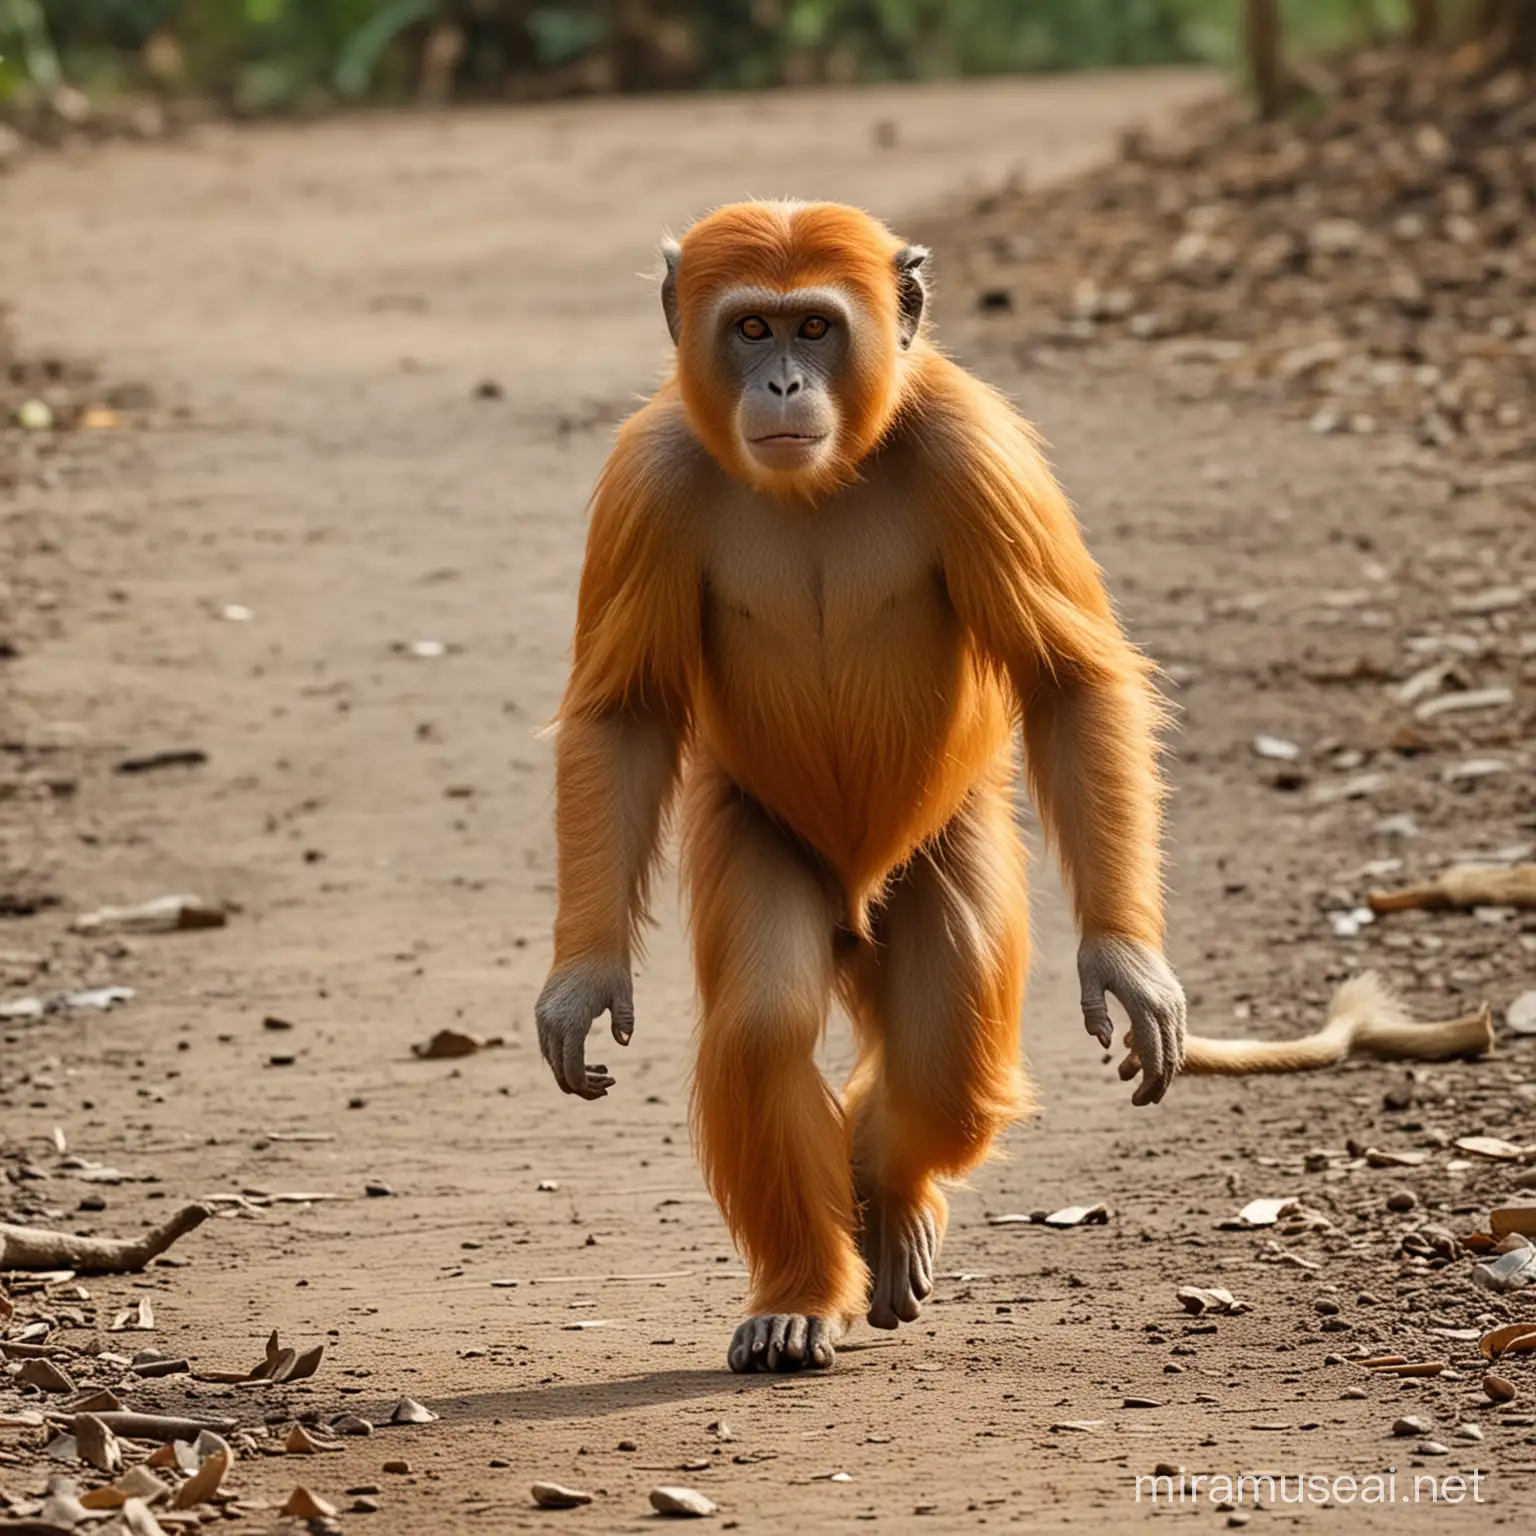 Uthan Orangutan Monkey Running on Four Feet